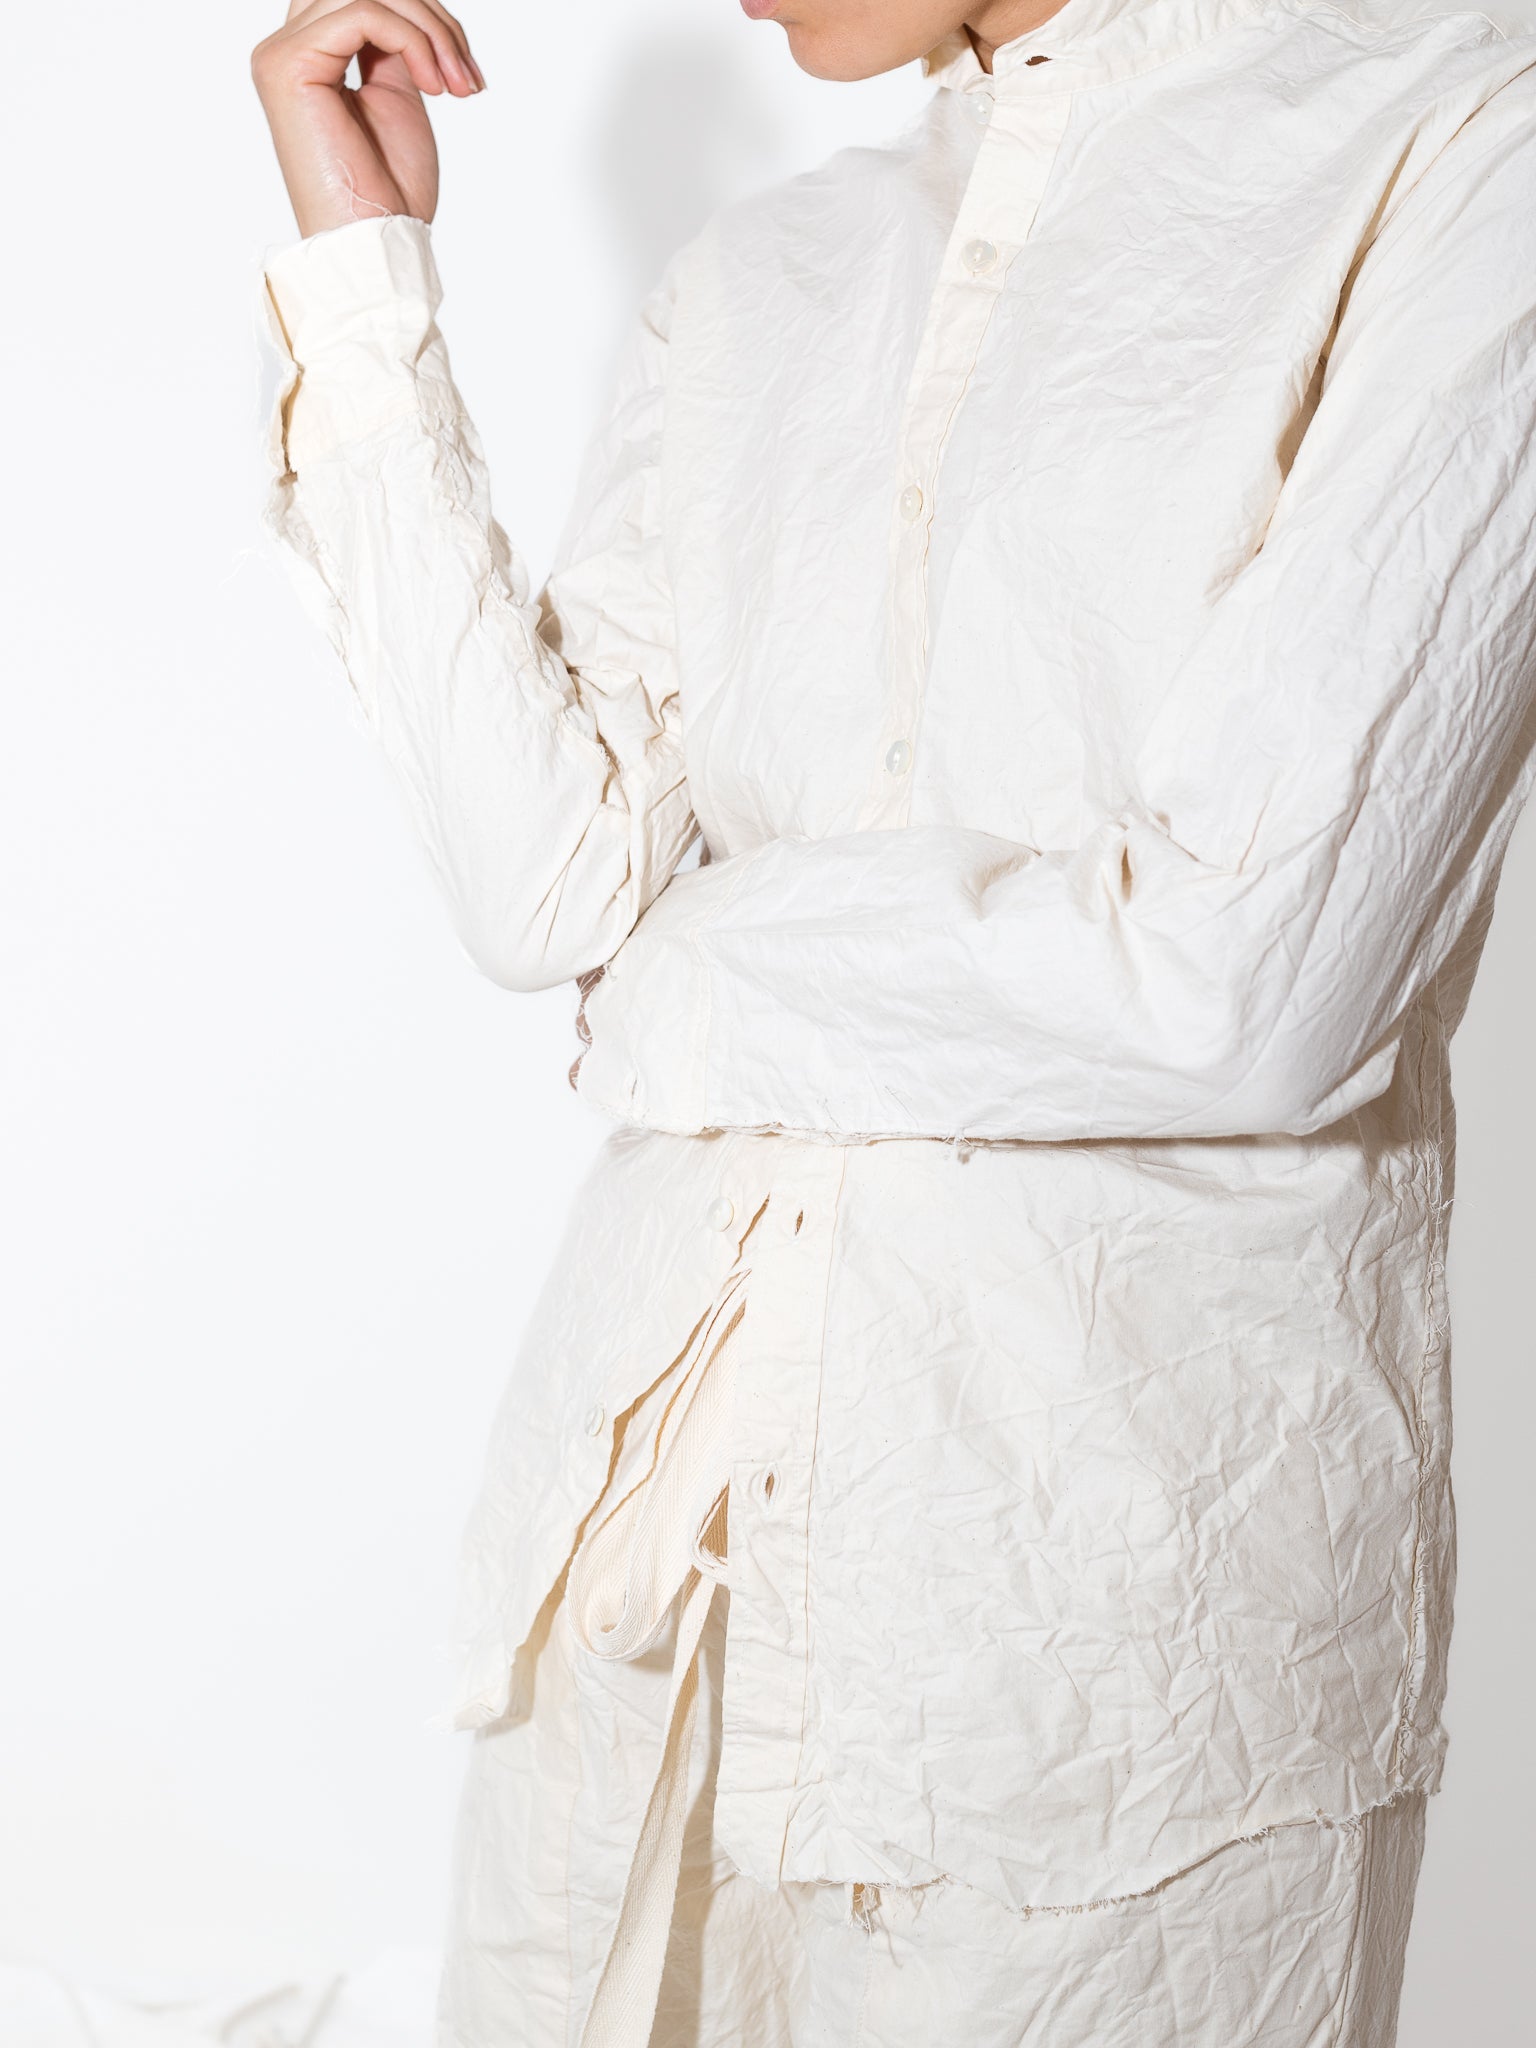 Elena Dawson Peak Collar Shirt, Cream Cotton Cambric - Worthwhile